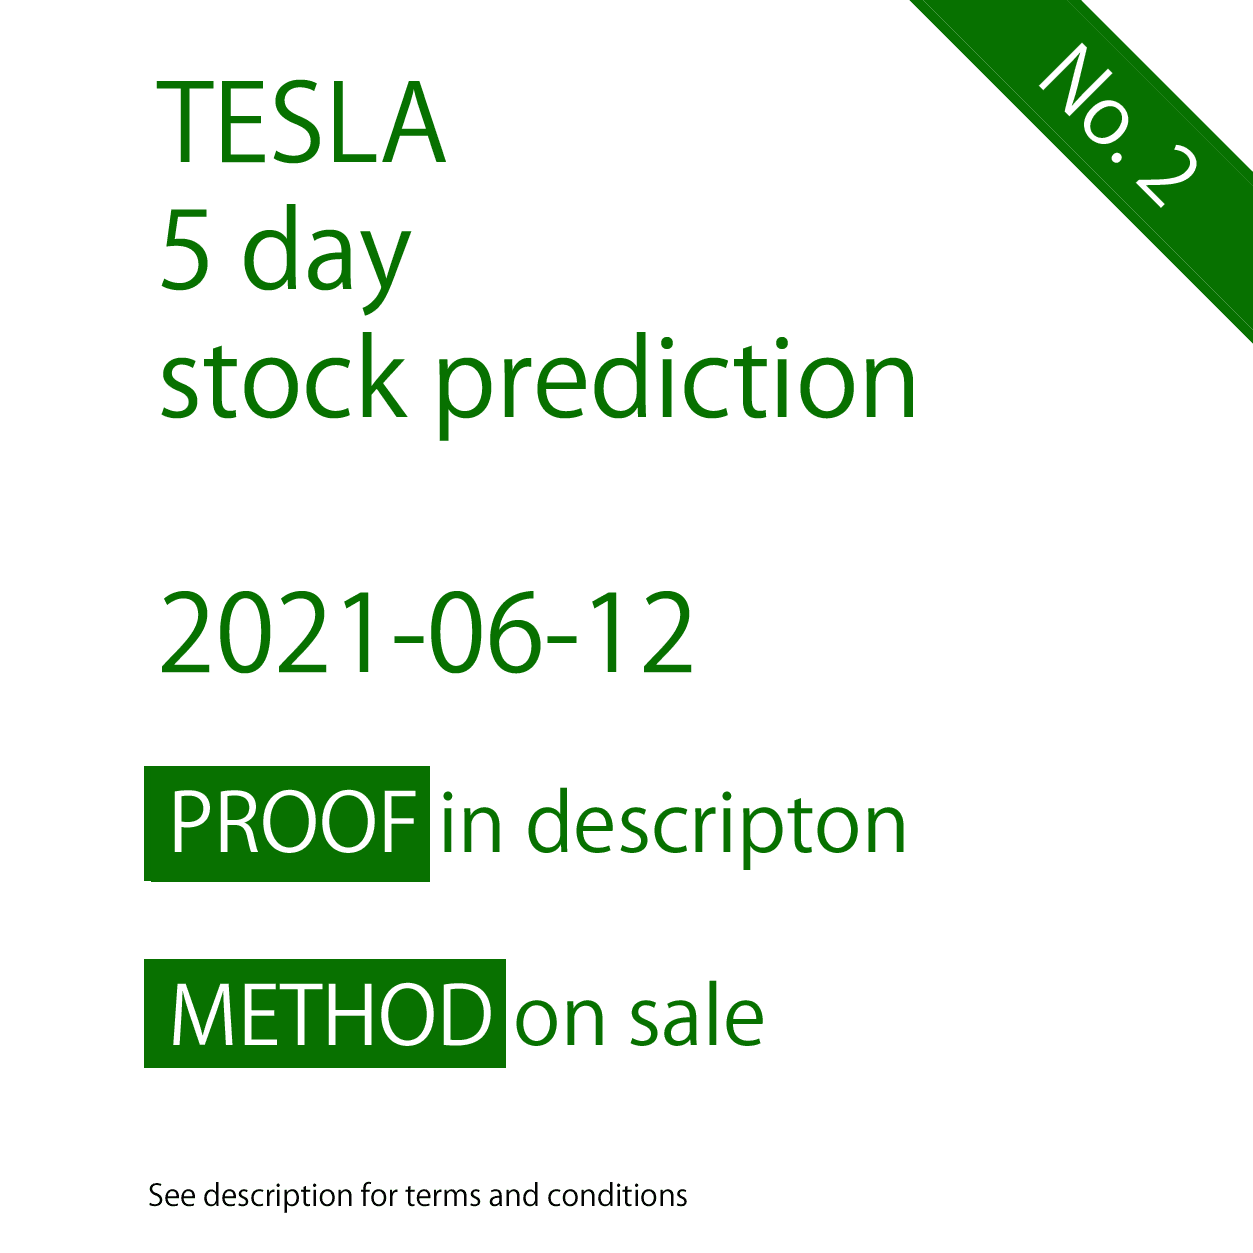 TSLA stock prediction see description for details. Stock